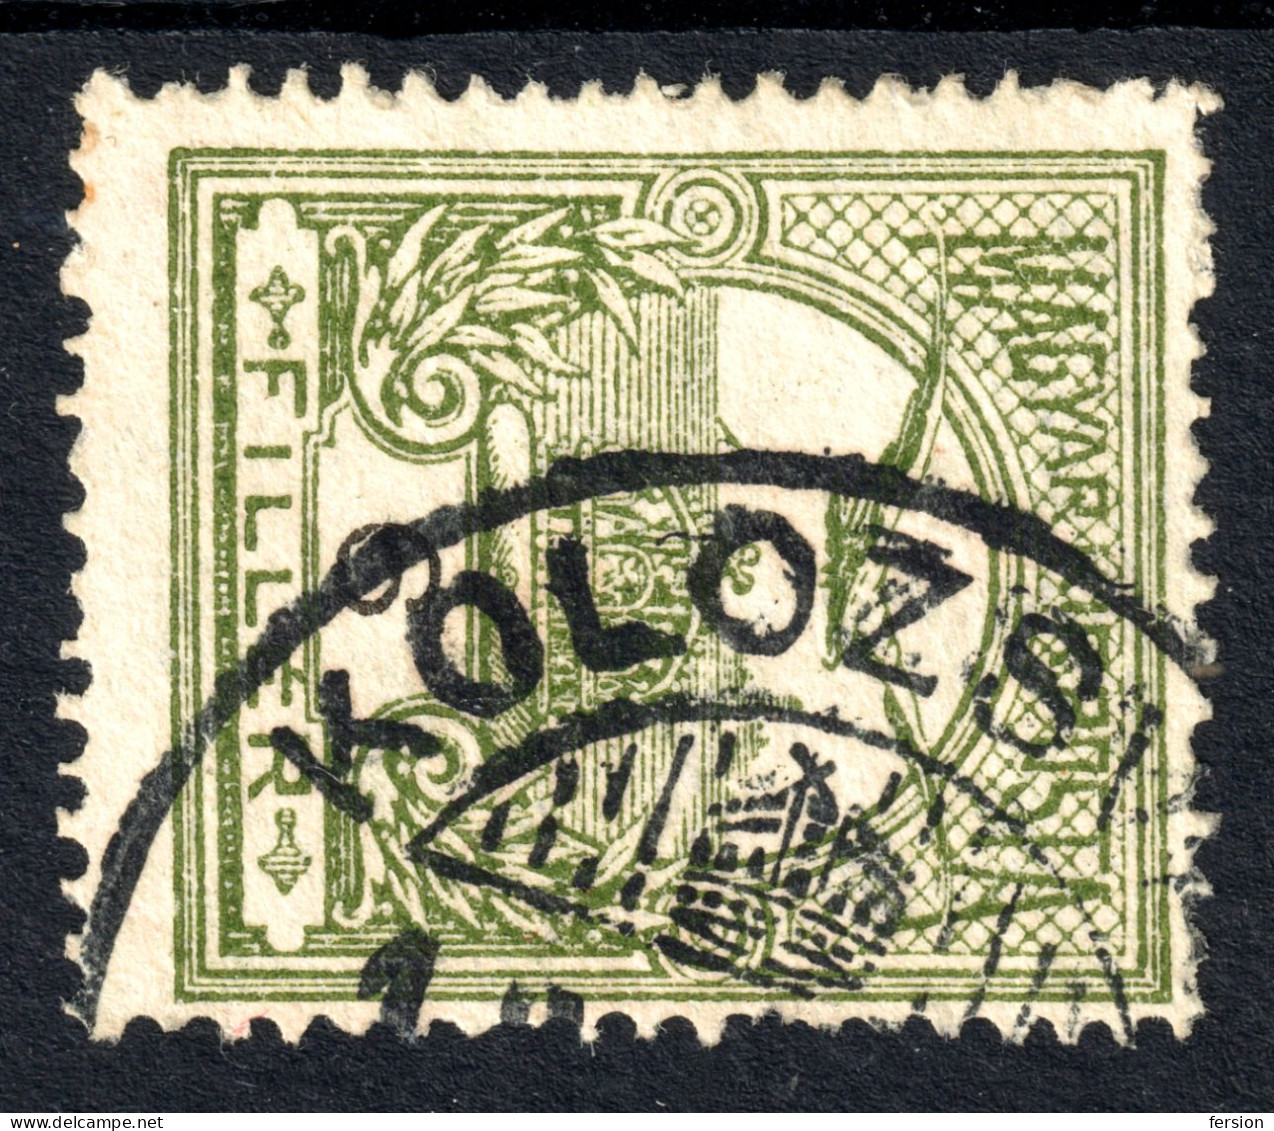 KOLOZSVÁR CLUJ-NAPOCA Postmark / TURUL Crown 1910's Hungary Romania Banat Transylvania KOLOZS County KuK K.u.K - 6 Fill - Transylvanie